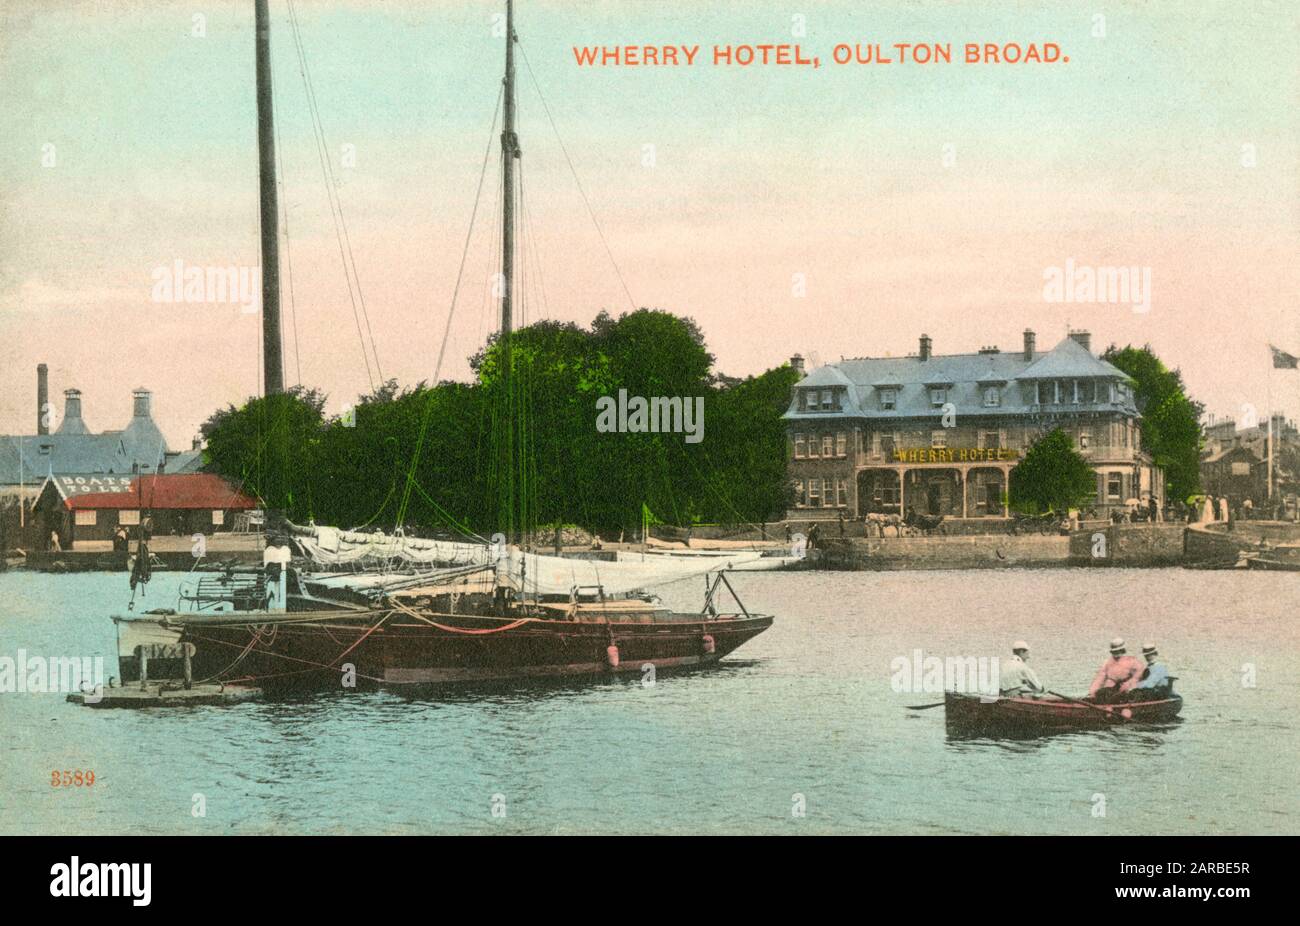 Wherry Hotel, Oulton Broad, Lowestoft, Suffolk, England     Date: 1909 Stock Photo